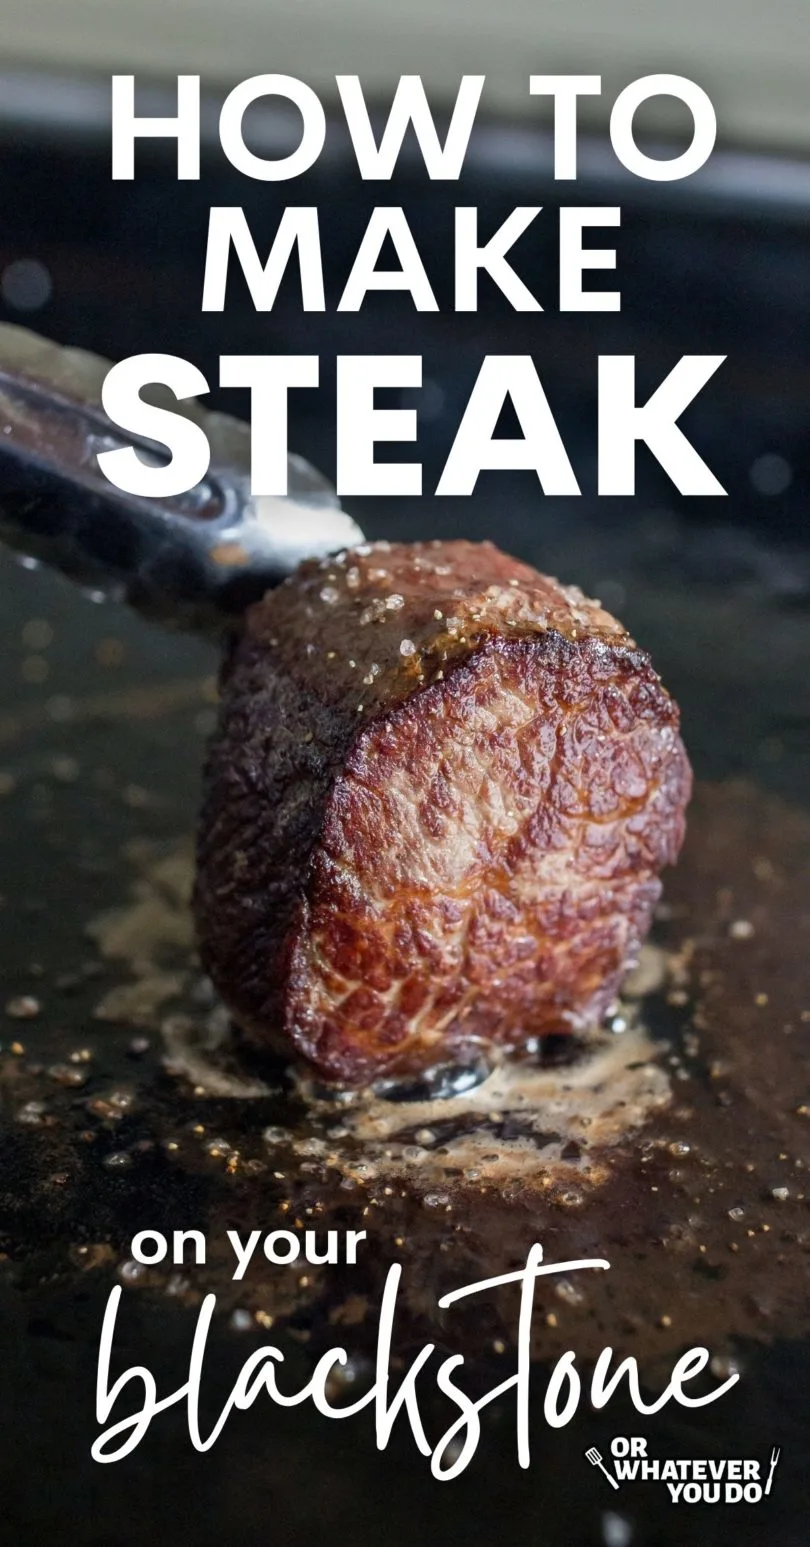 https://www.orwhateveryoudo.com/wp-content/uploads/2019/07/Blackstone-Steak-2-1-810x1547.jpg.webp